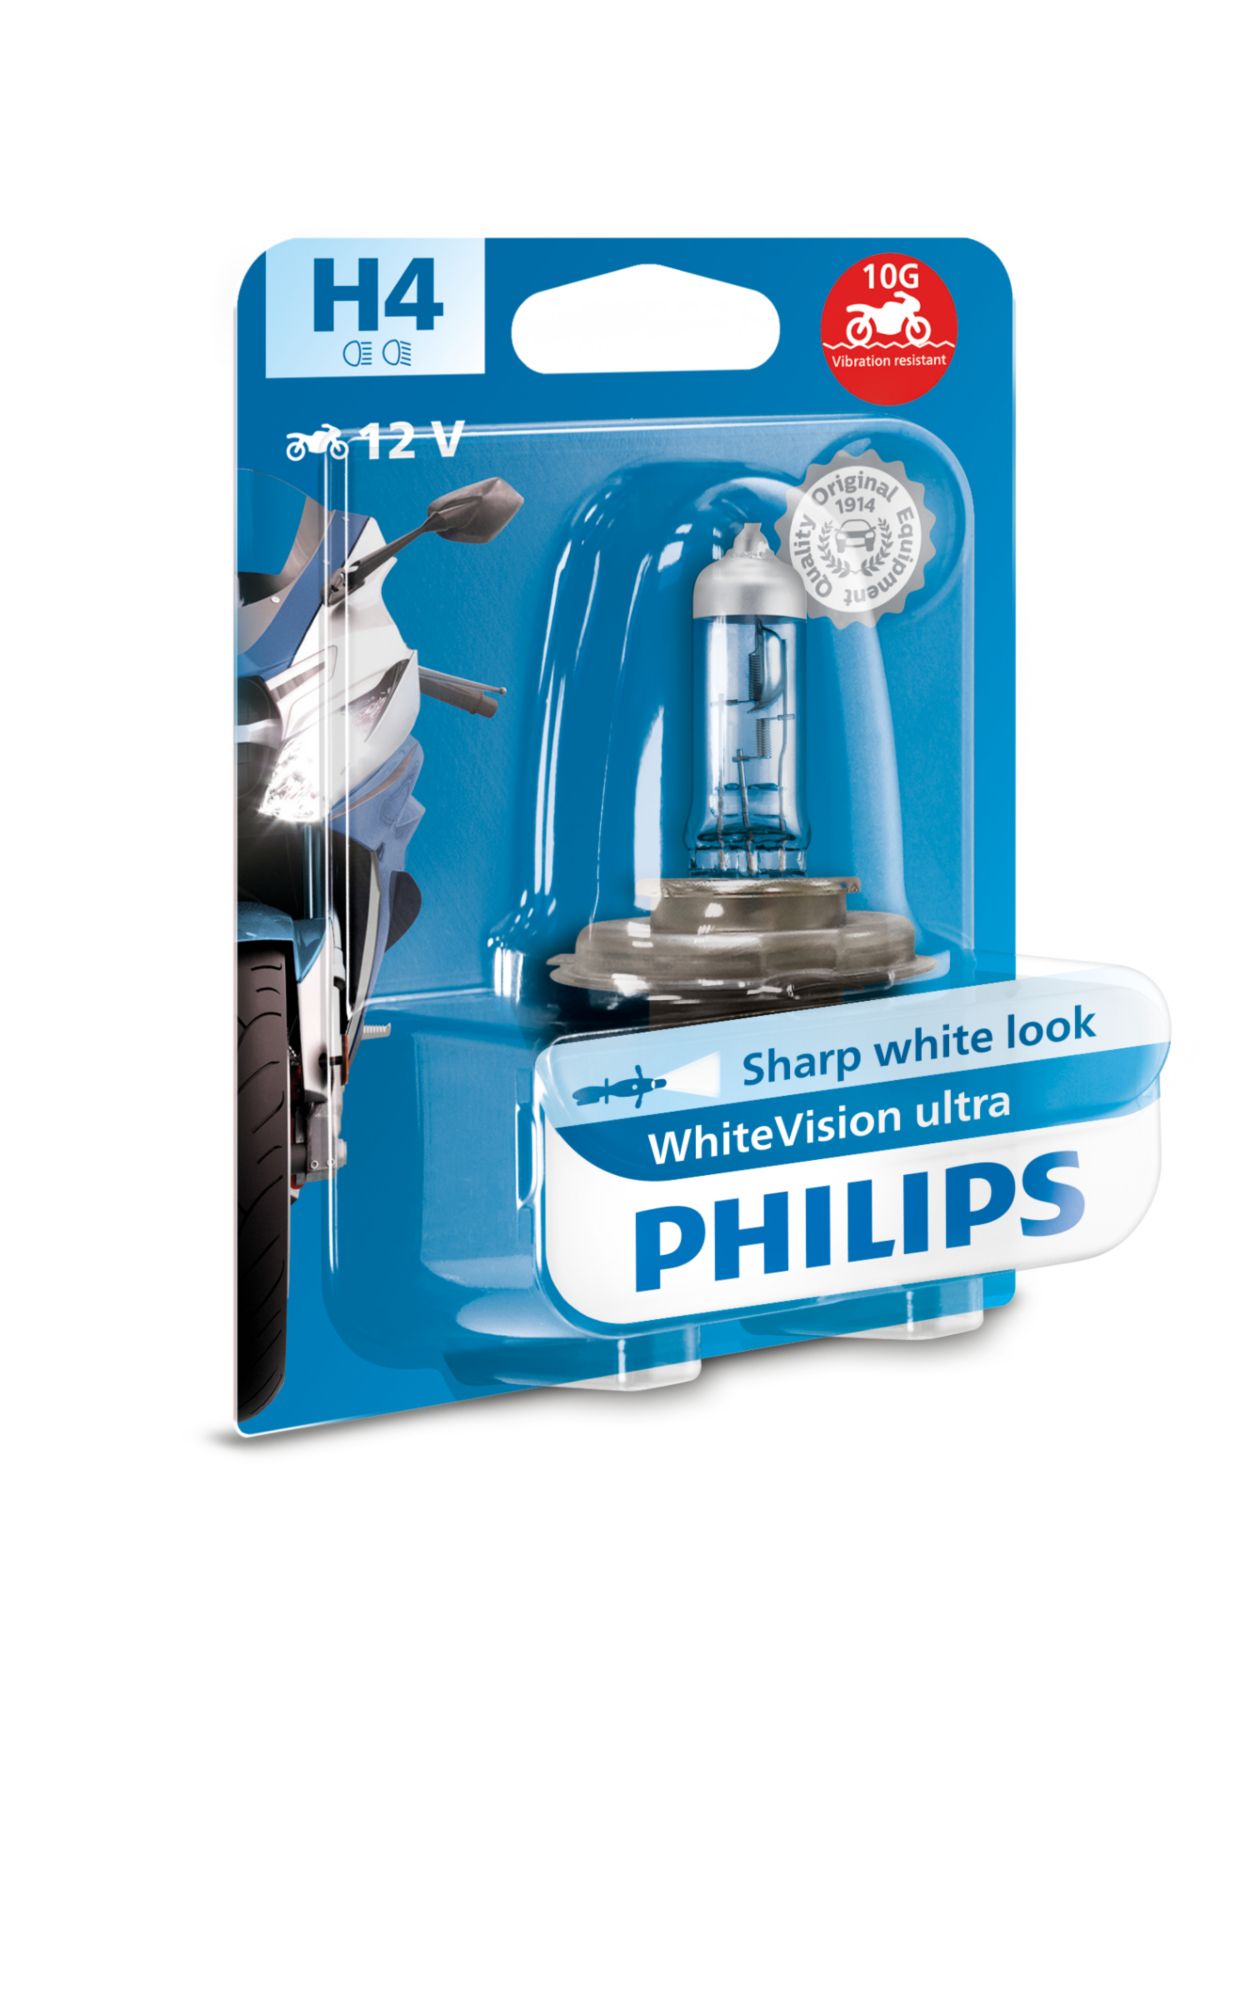 Set lámparas Philips WhiteVision Ultra H7